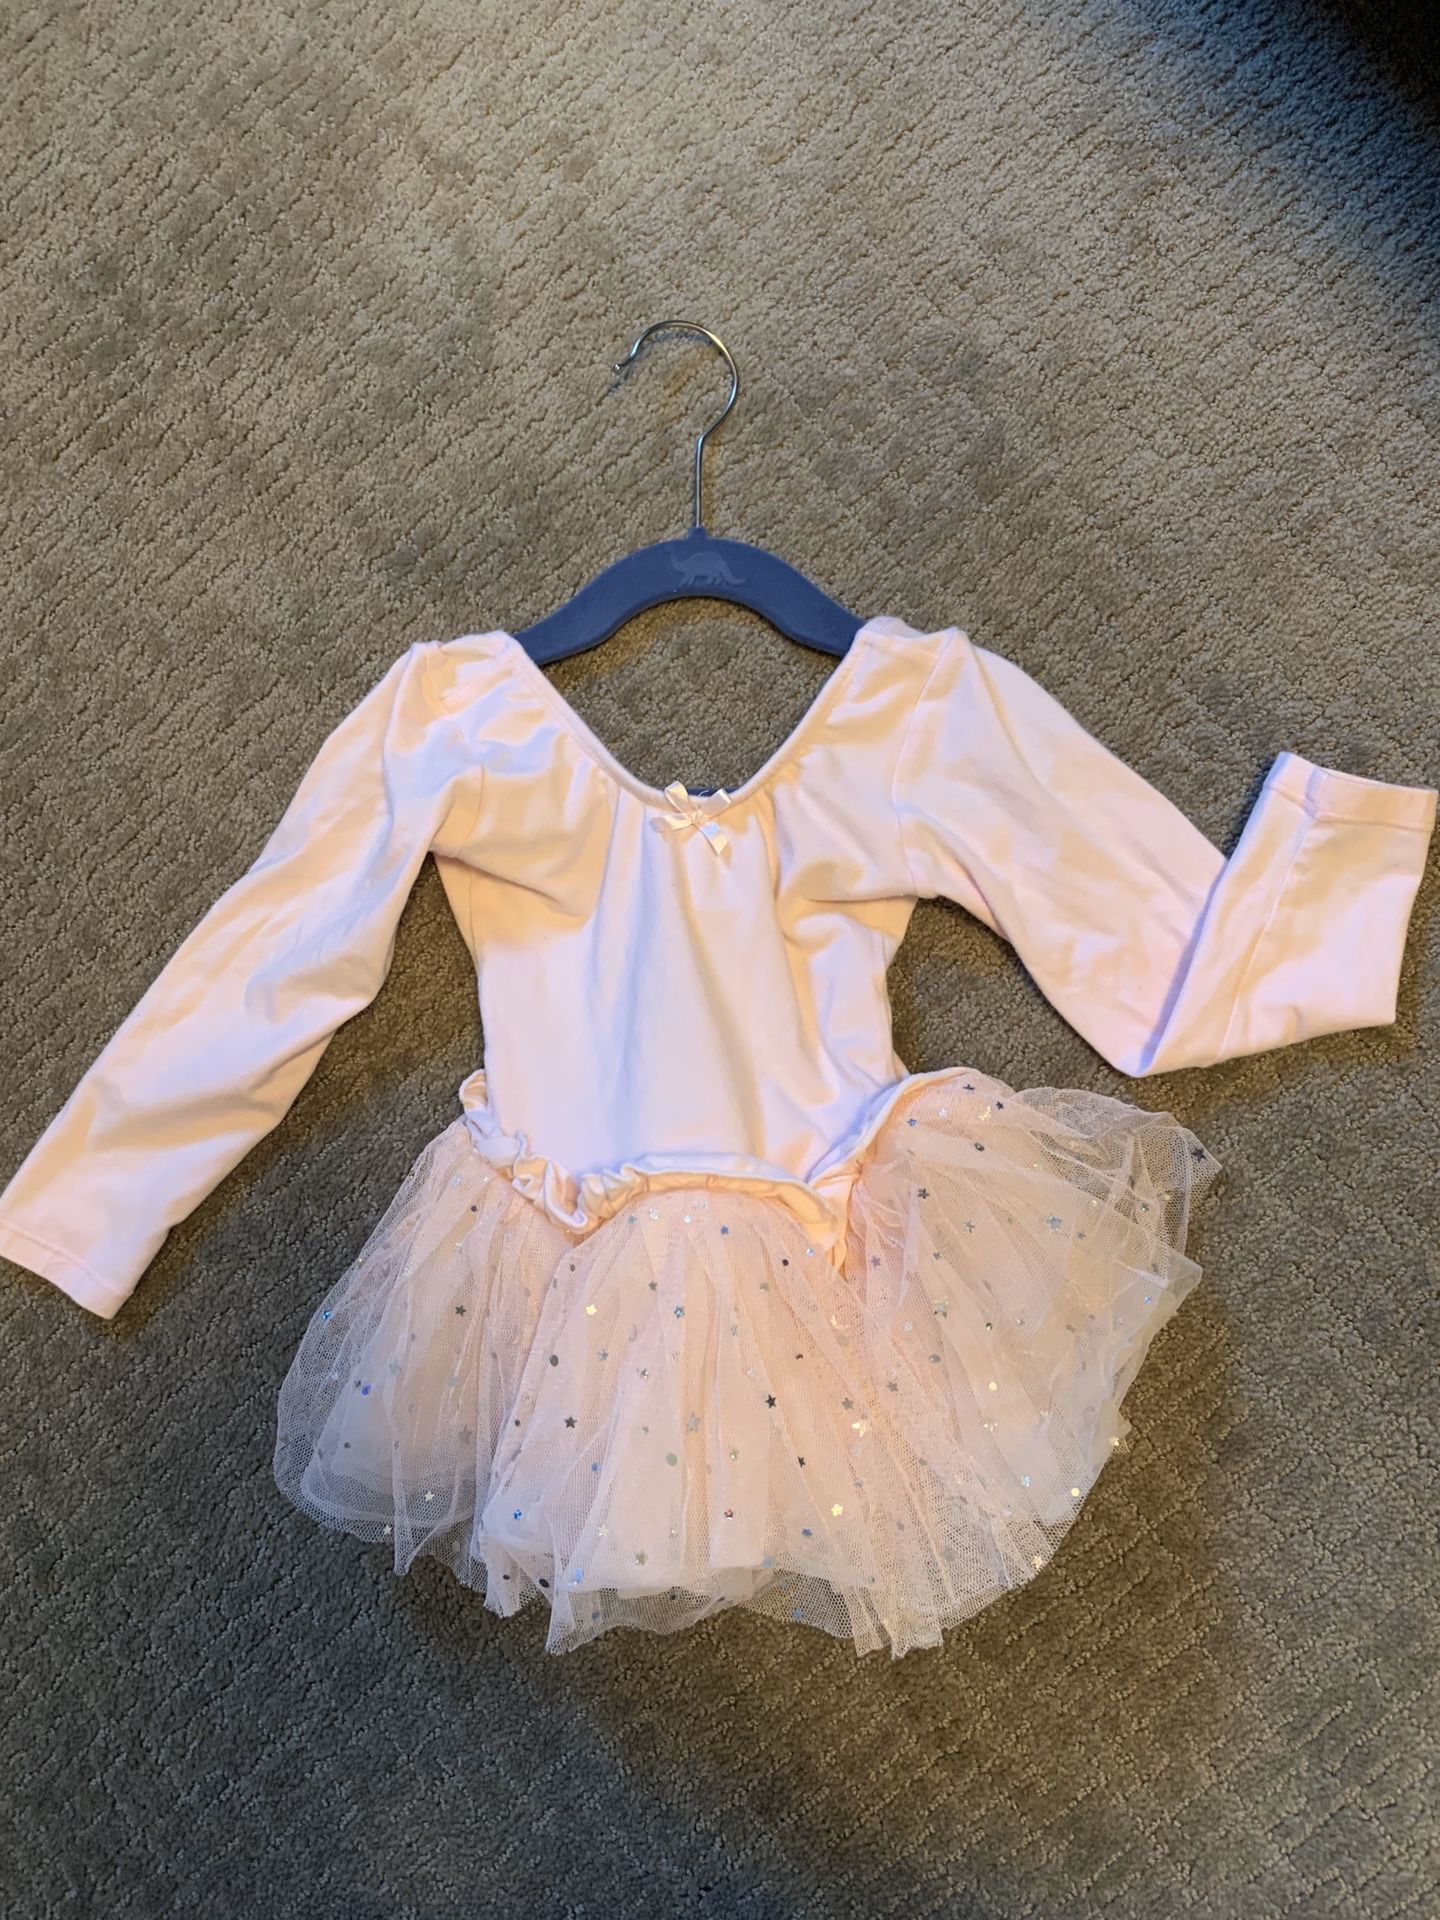 Toddler ballet dress